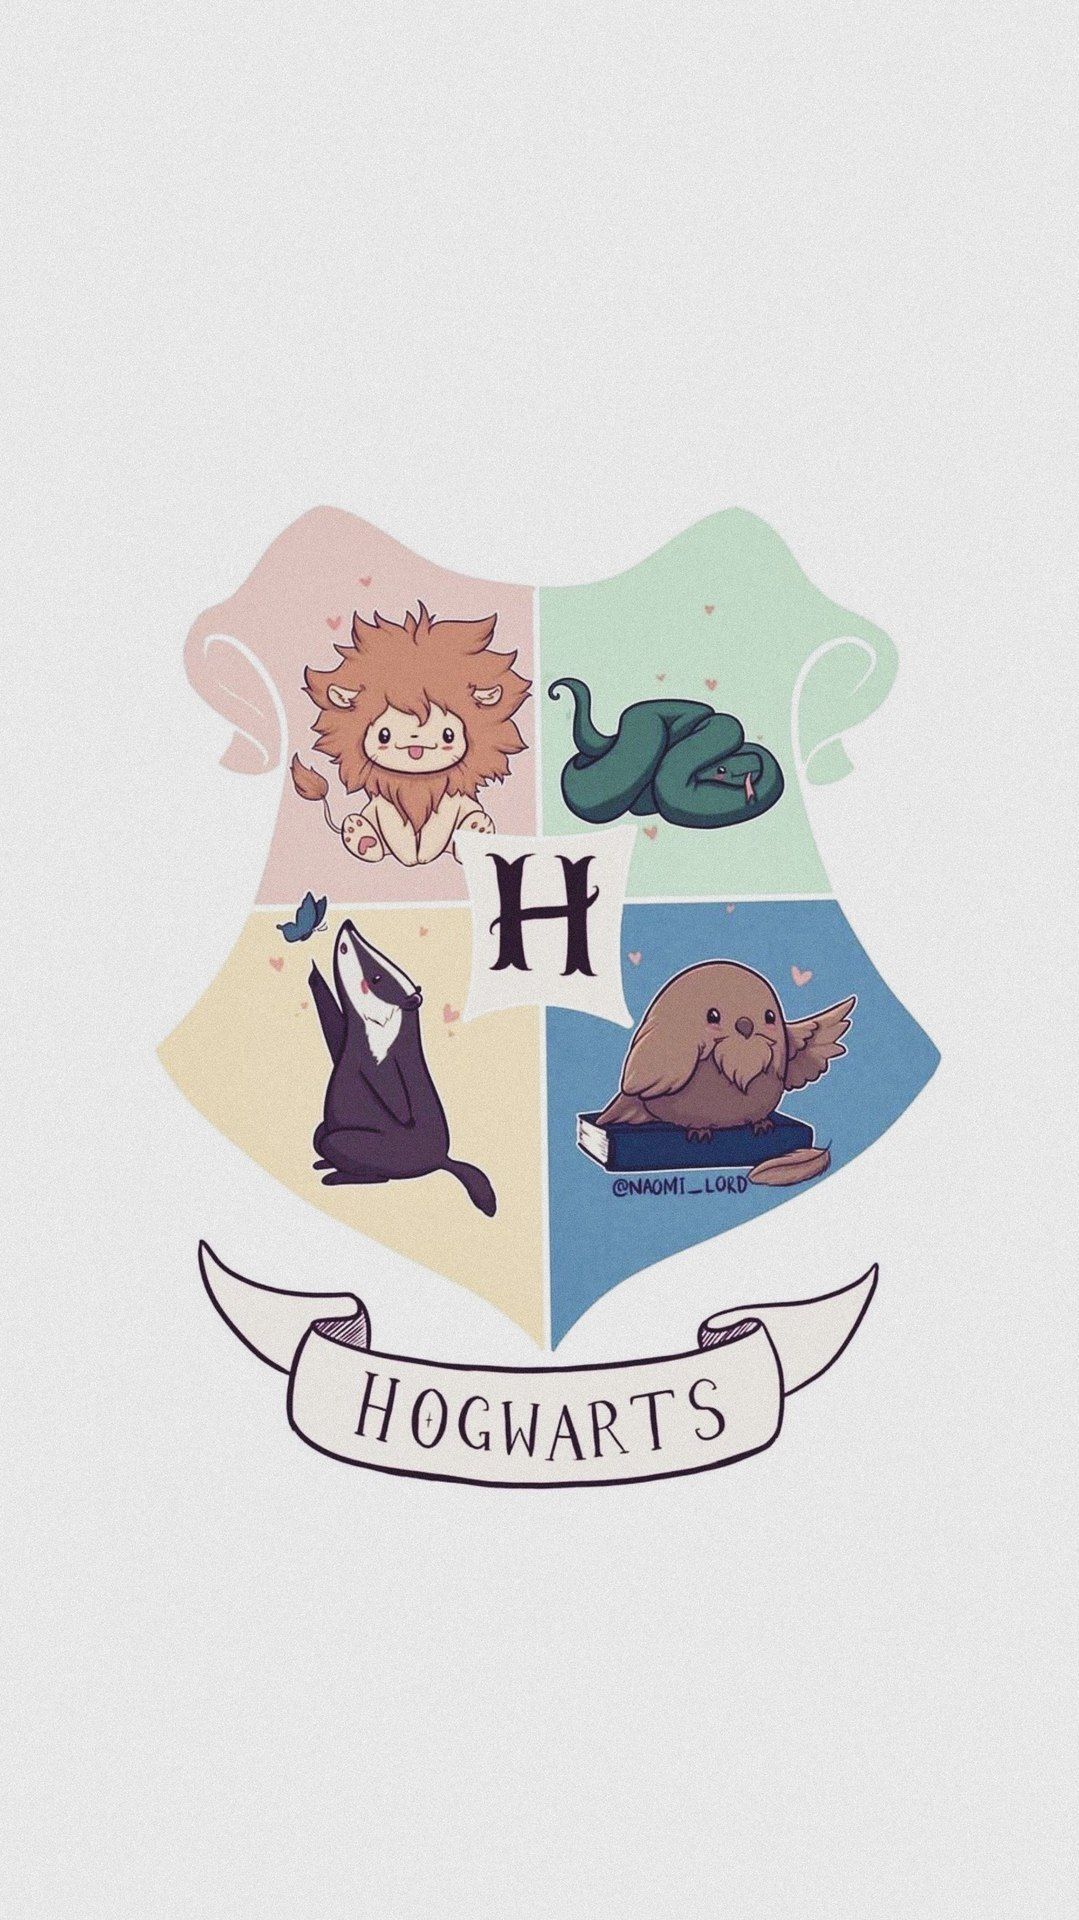 Tổng hợp 999 Harry Potter cute background Hình nền cho fan Harry Potter